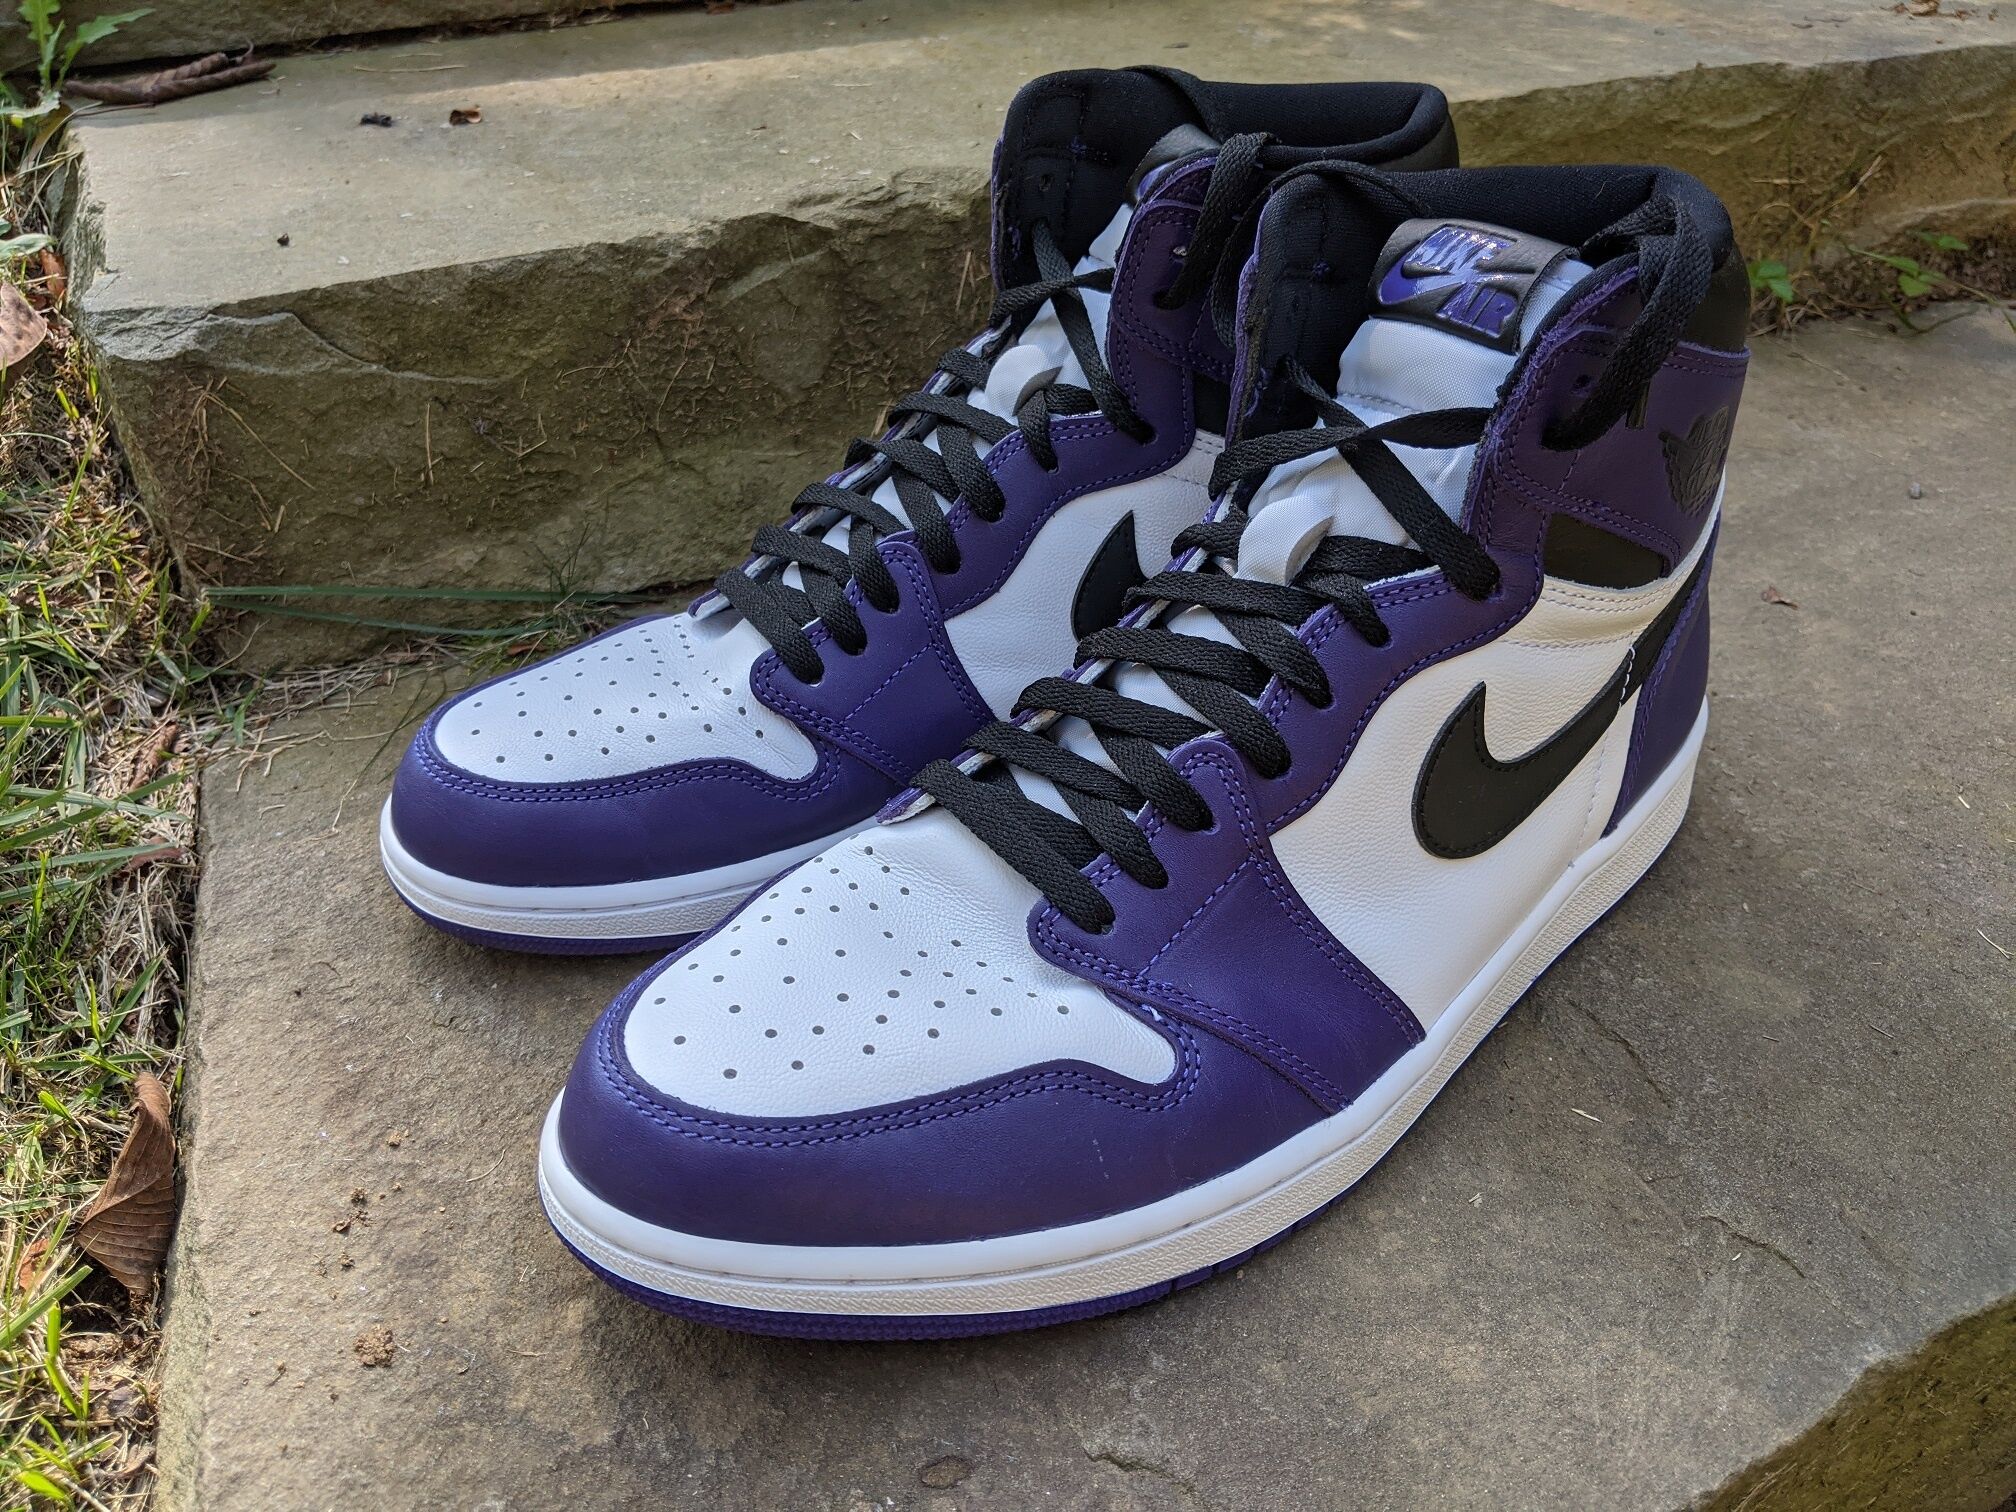 Air Jordan "Court Out of Box - 100wears